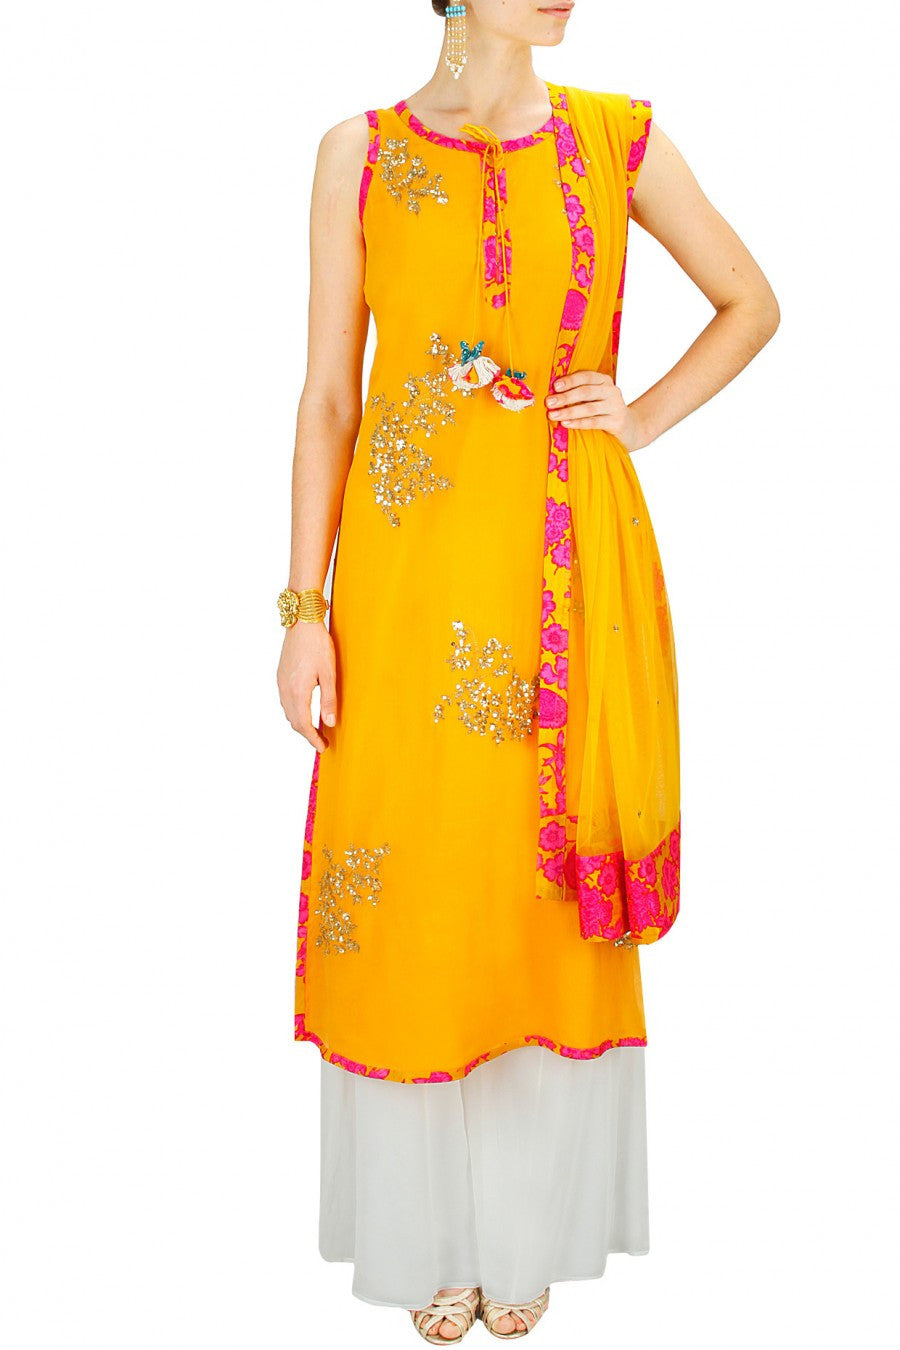 Buy Print Cotton Designer Pakistani Salwar Suit in Yellow Online